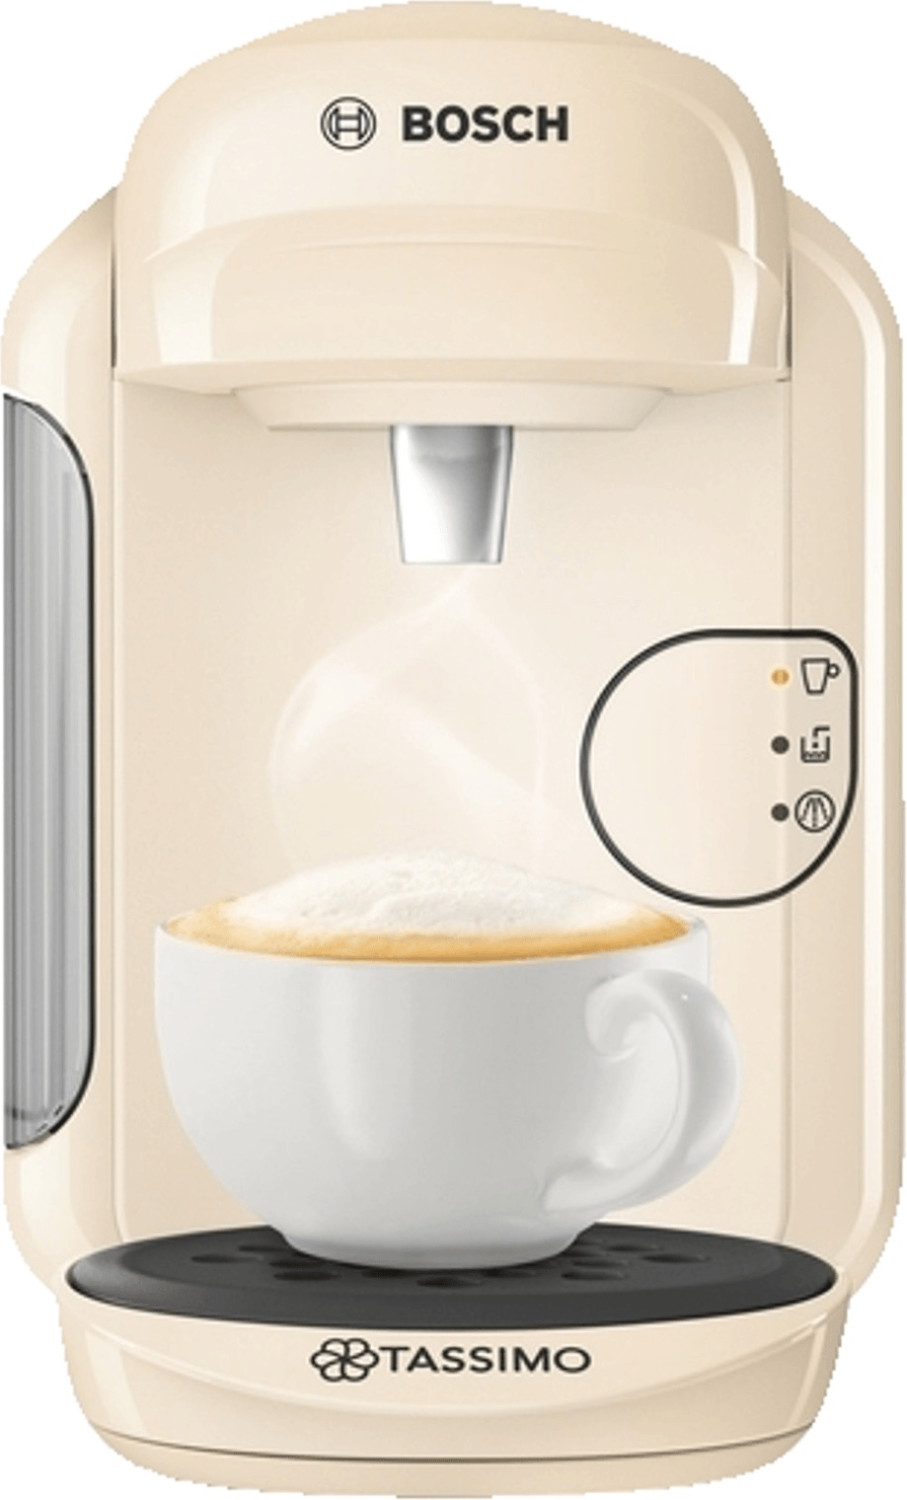 Photos - Coffee Maker Bosch Tassimo Vivy 2 TAS140 Cream 